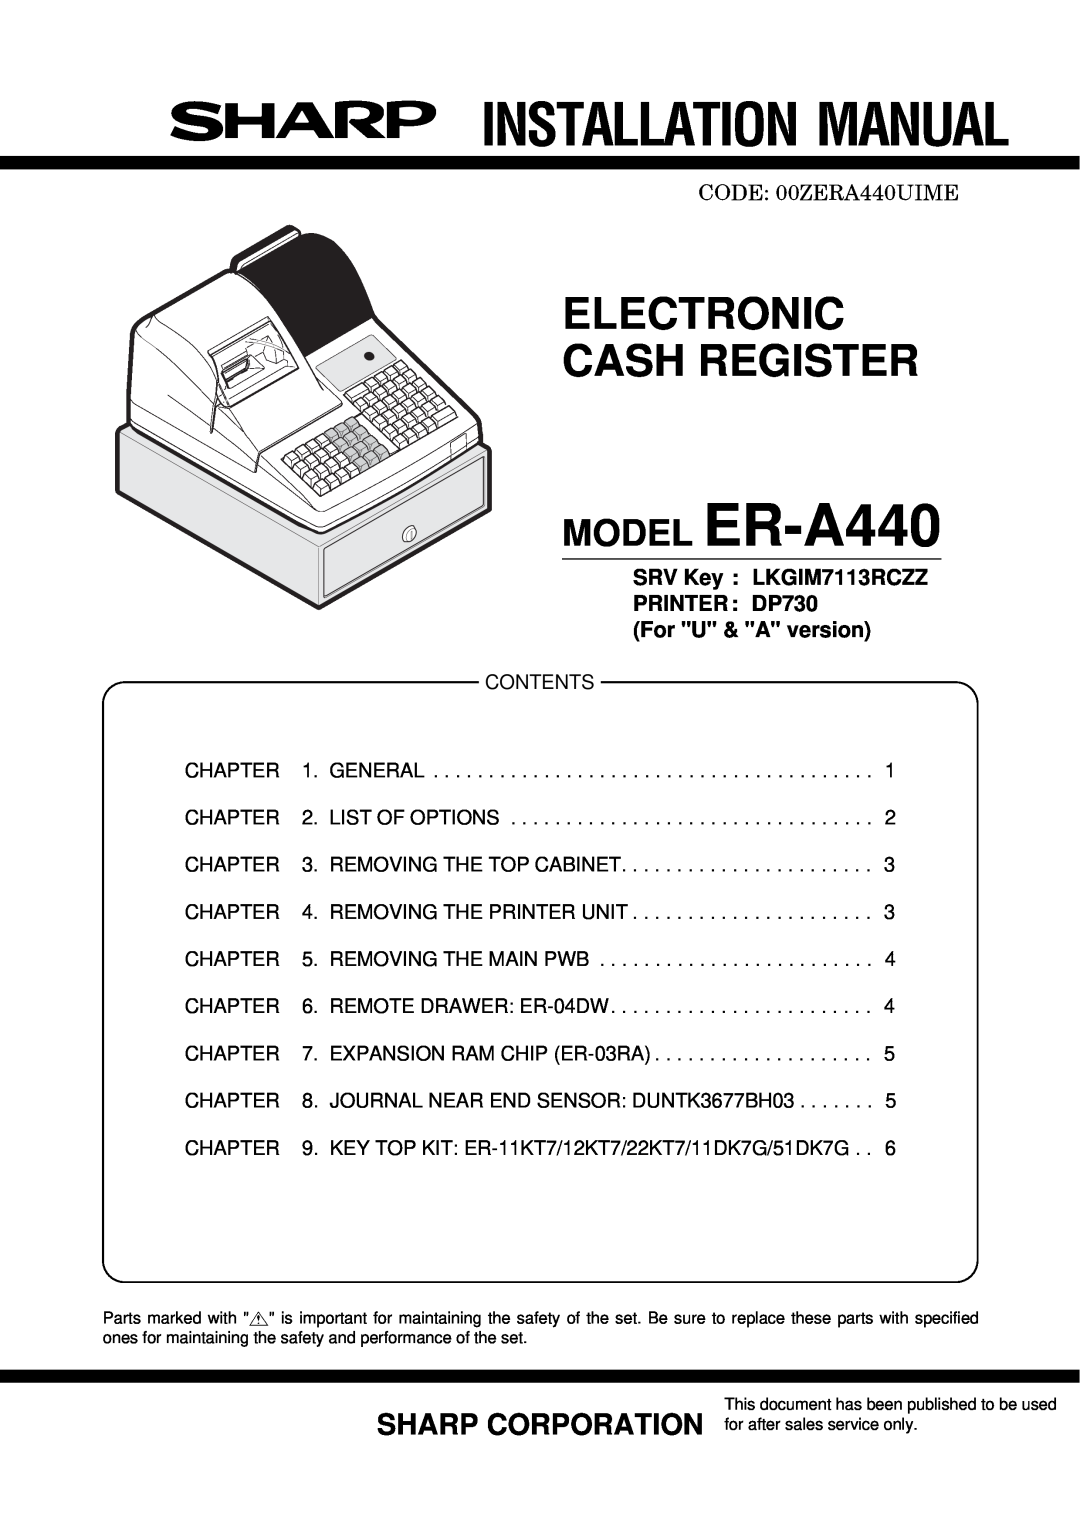 Sharp manual SRV Key LKGIM7113RCZZ PRINTER DP730 For U & A version, MODEL ER-A440, Electronic Cash Register 